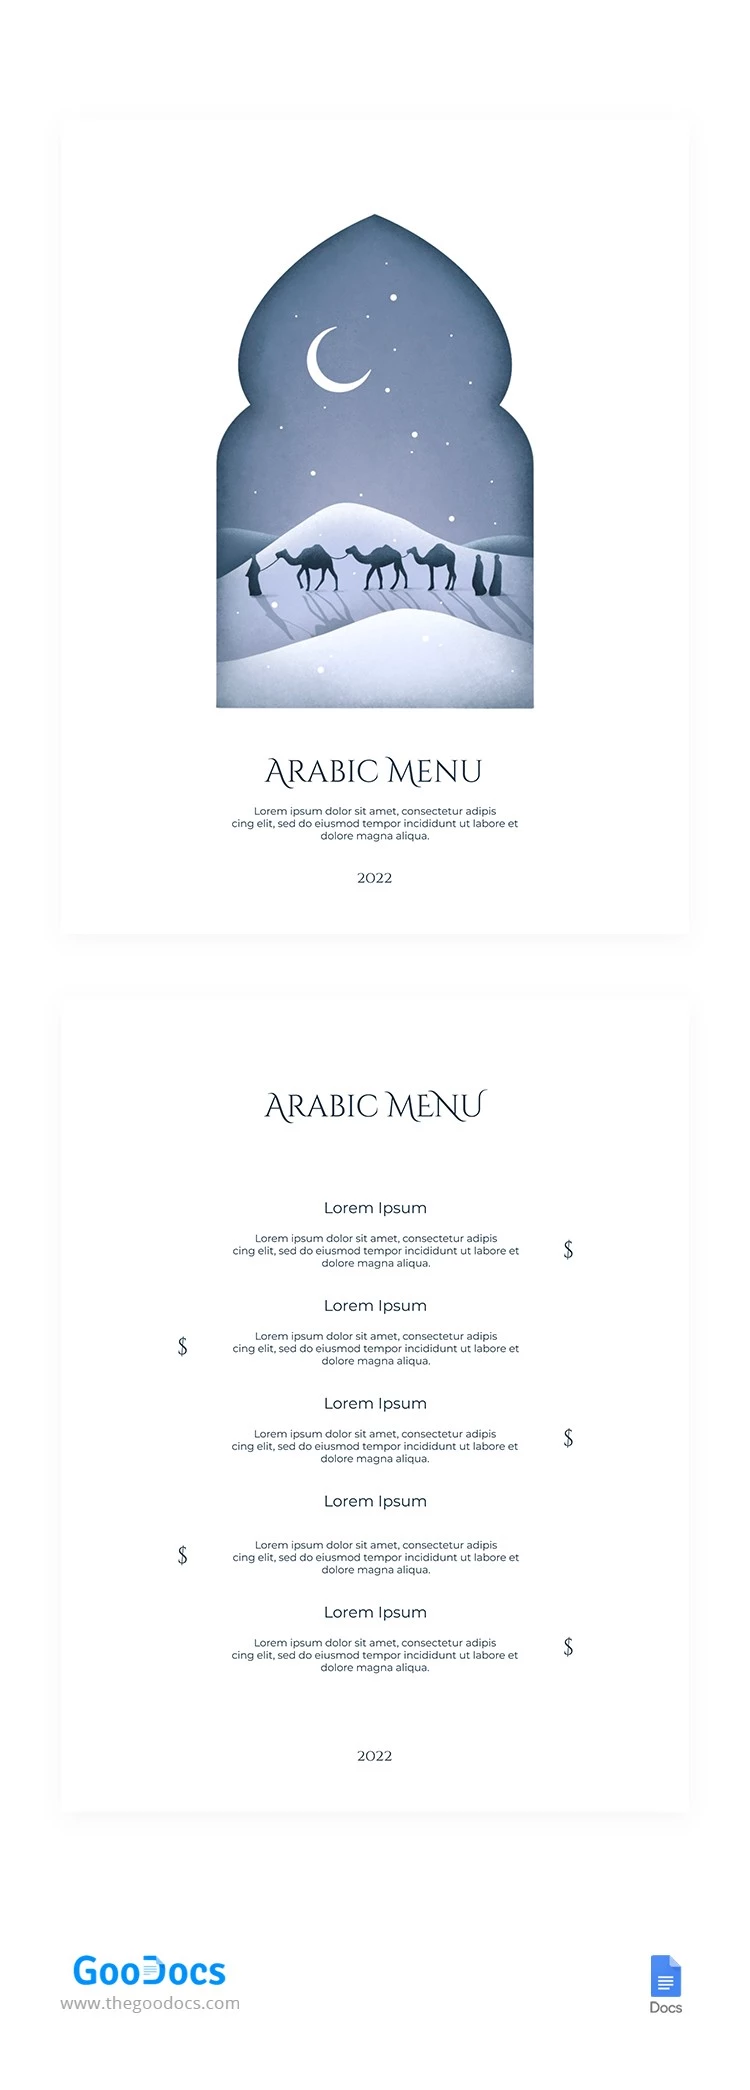 Dessin du Menu de Restaurant Arabe - free Google Docs Template - 10065009